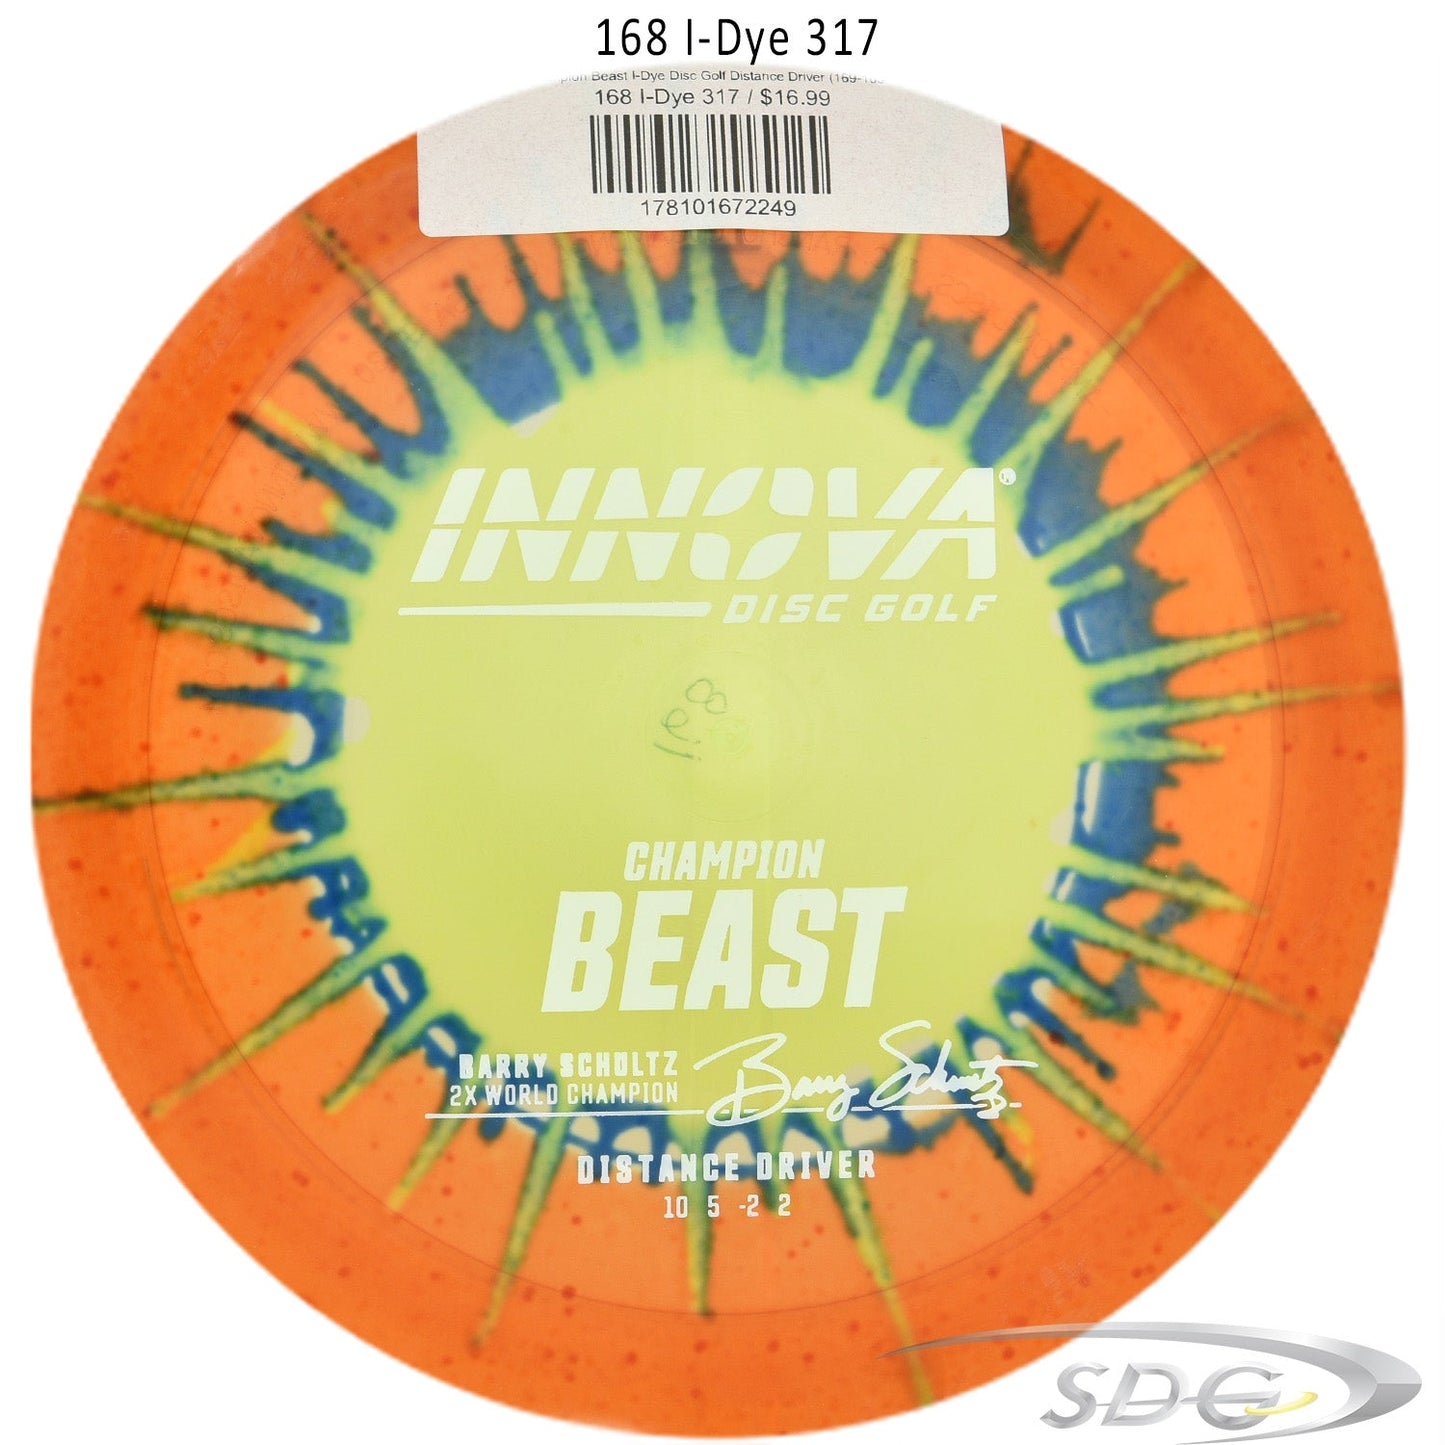 innova-champion-beast-i-dye-disc-golf-distance-driver 168 I-Dye 317